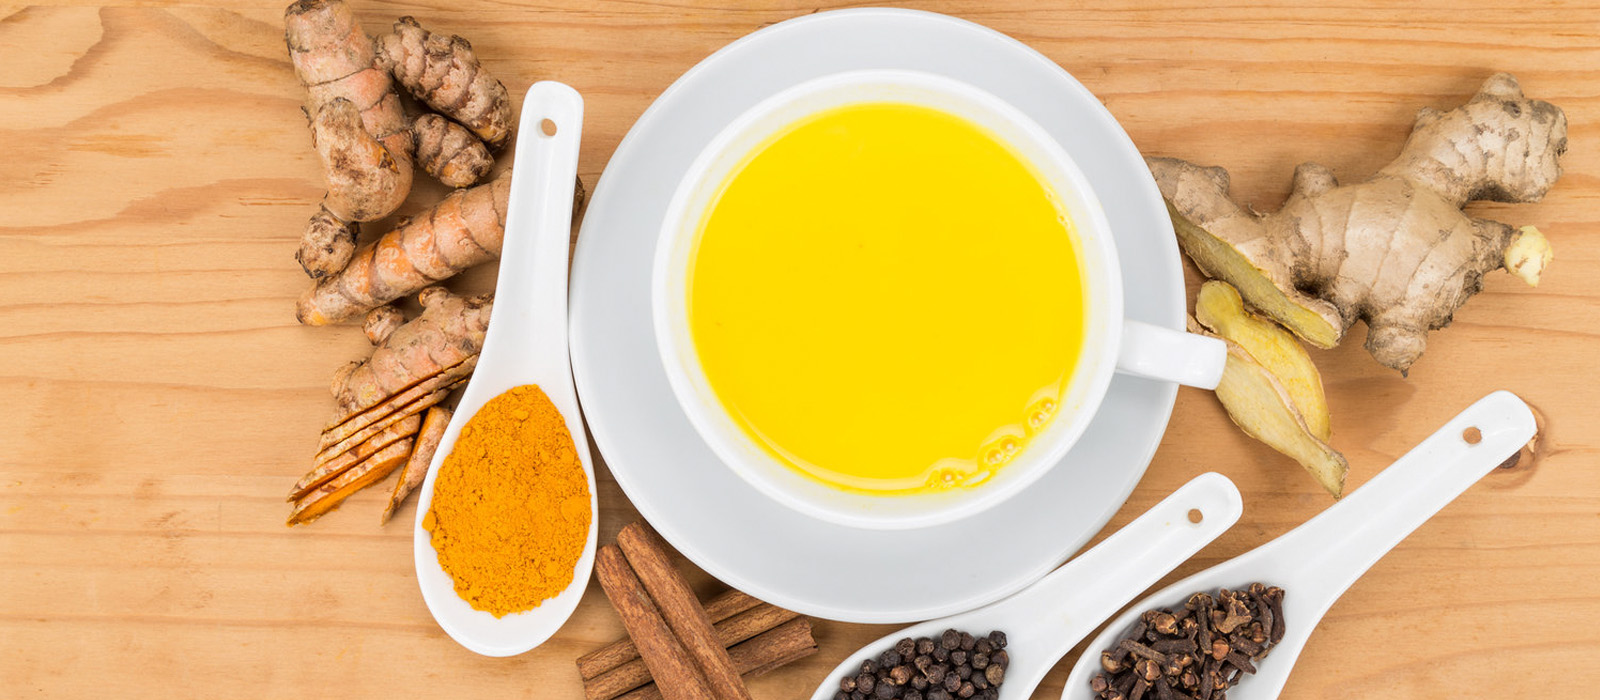 7 Amazing Benefits Of Ginger Tea And Turmeric